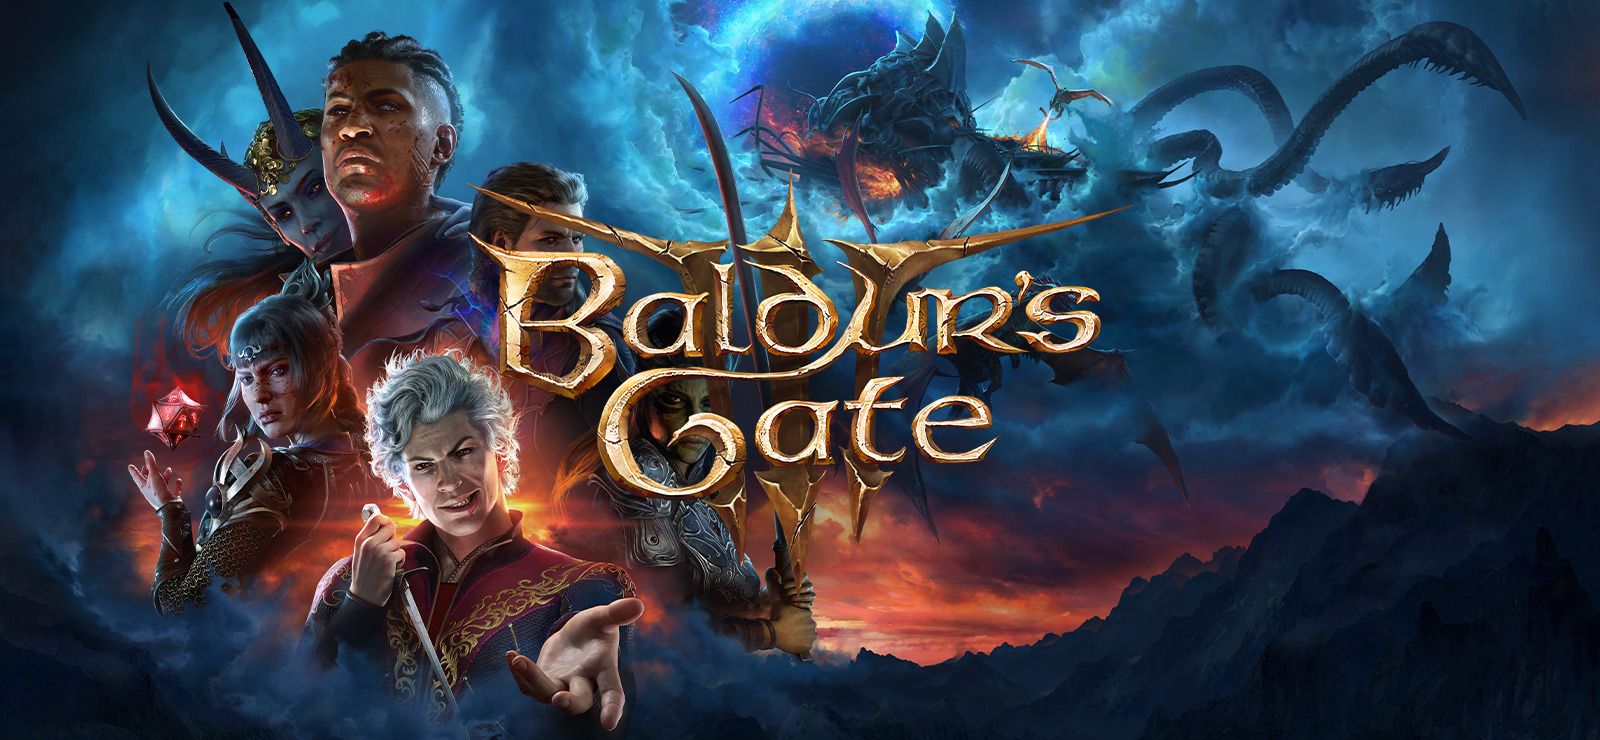 Baldur's Gate 3 on